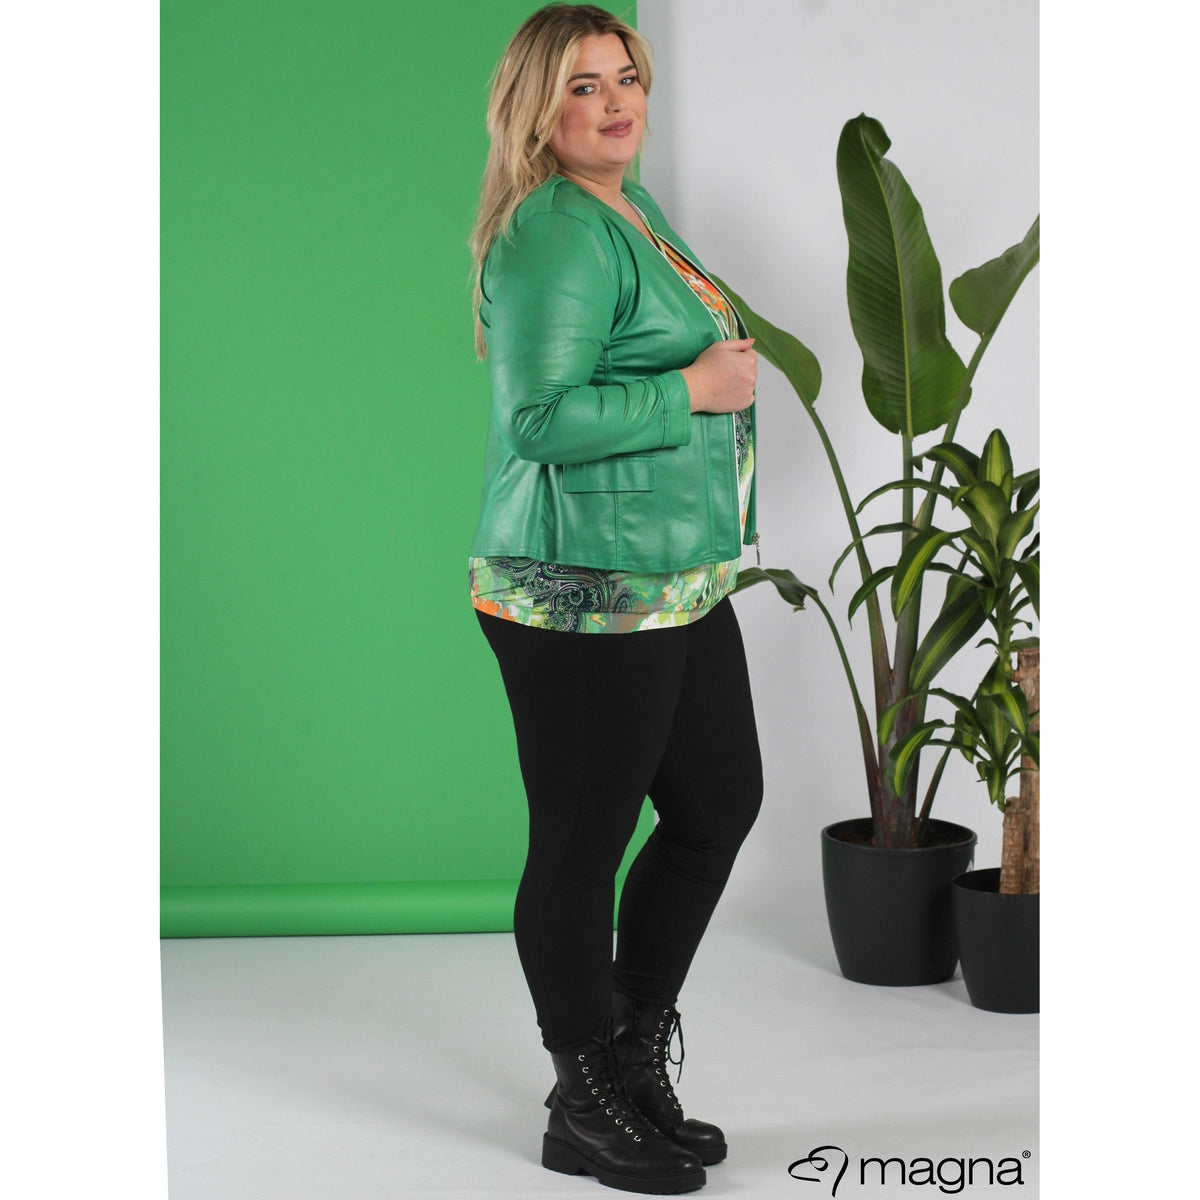 Magna Leather Look Jacket in Brazil Green - Wardrobe Plus